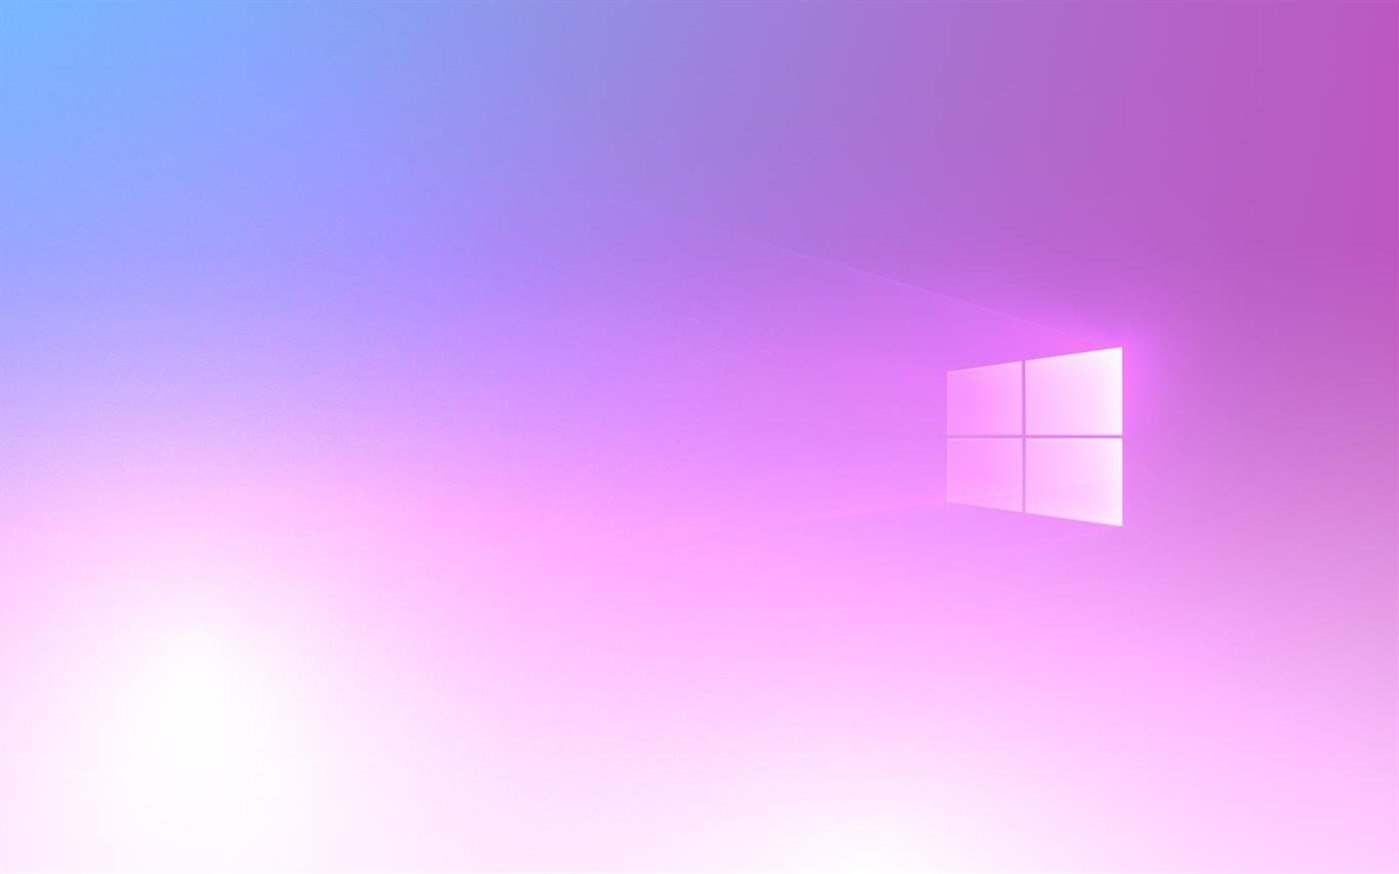 Windows 10 pink